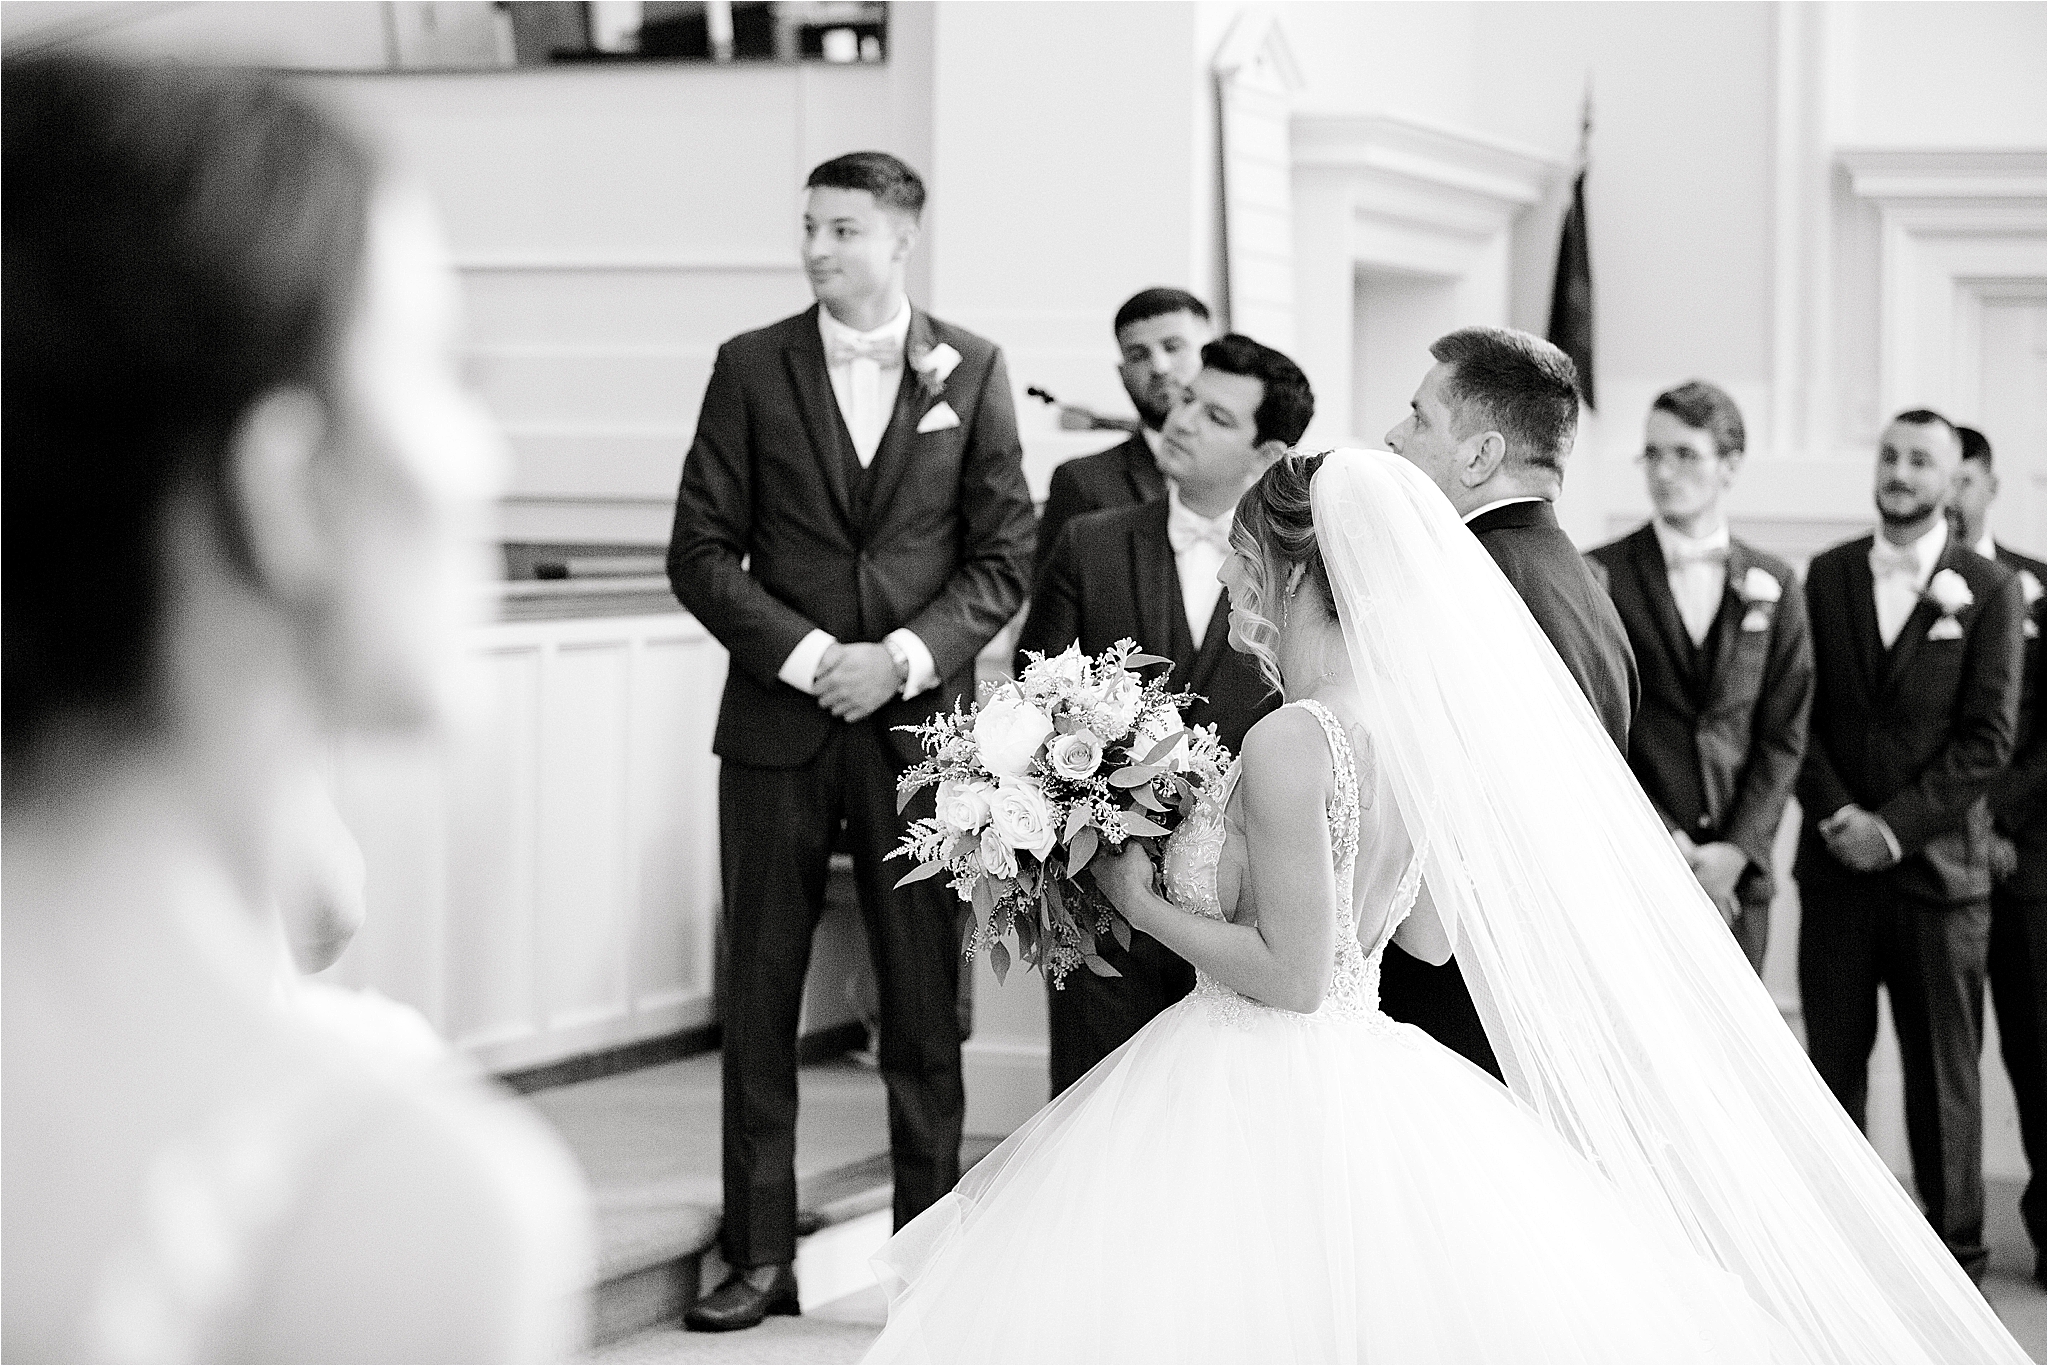 Olmstead Community Church wedding ceremony by Canton Wedding Photographers